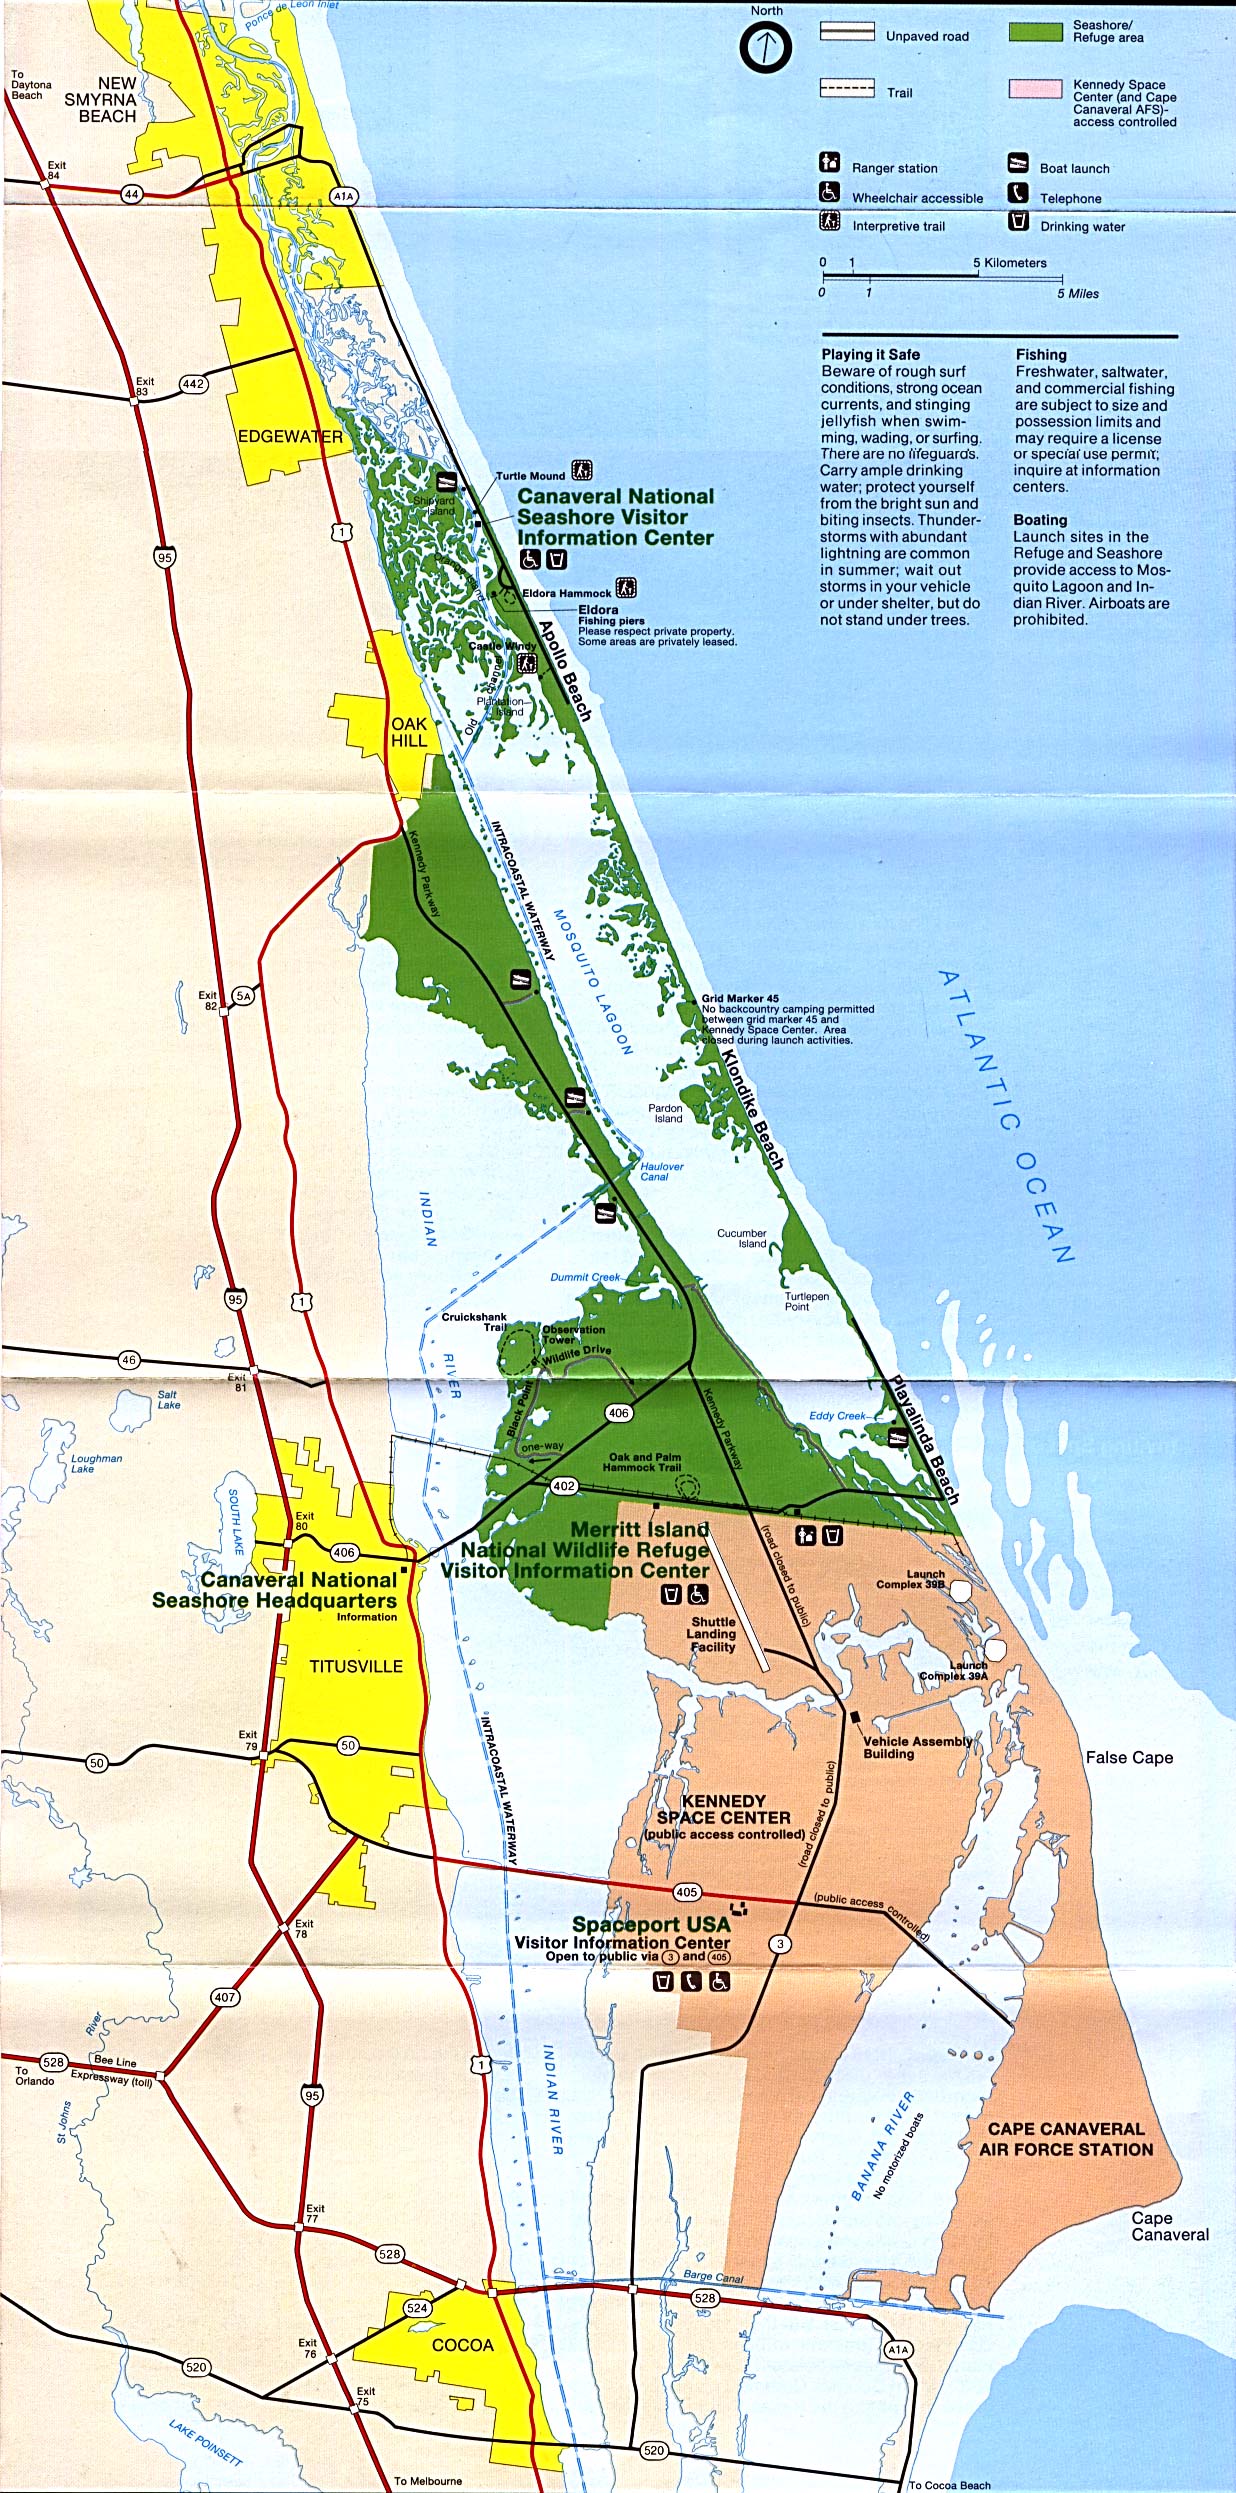 south padre national seashore map